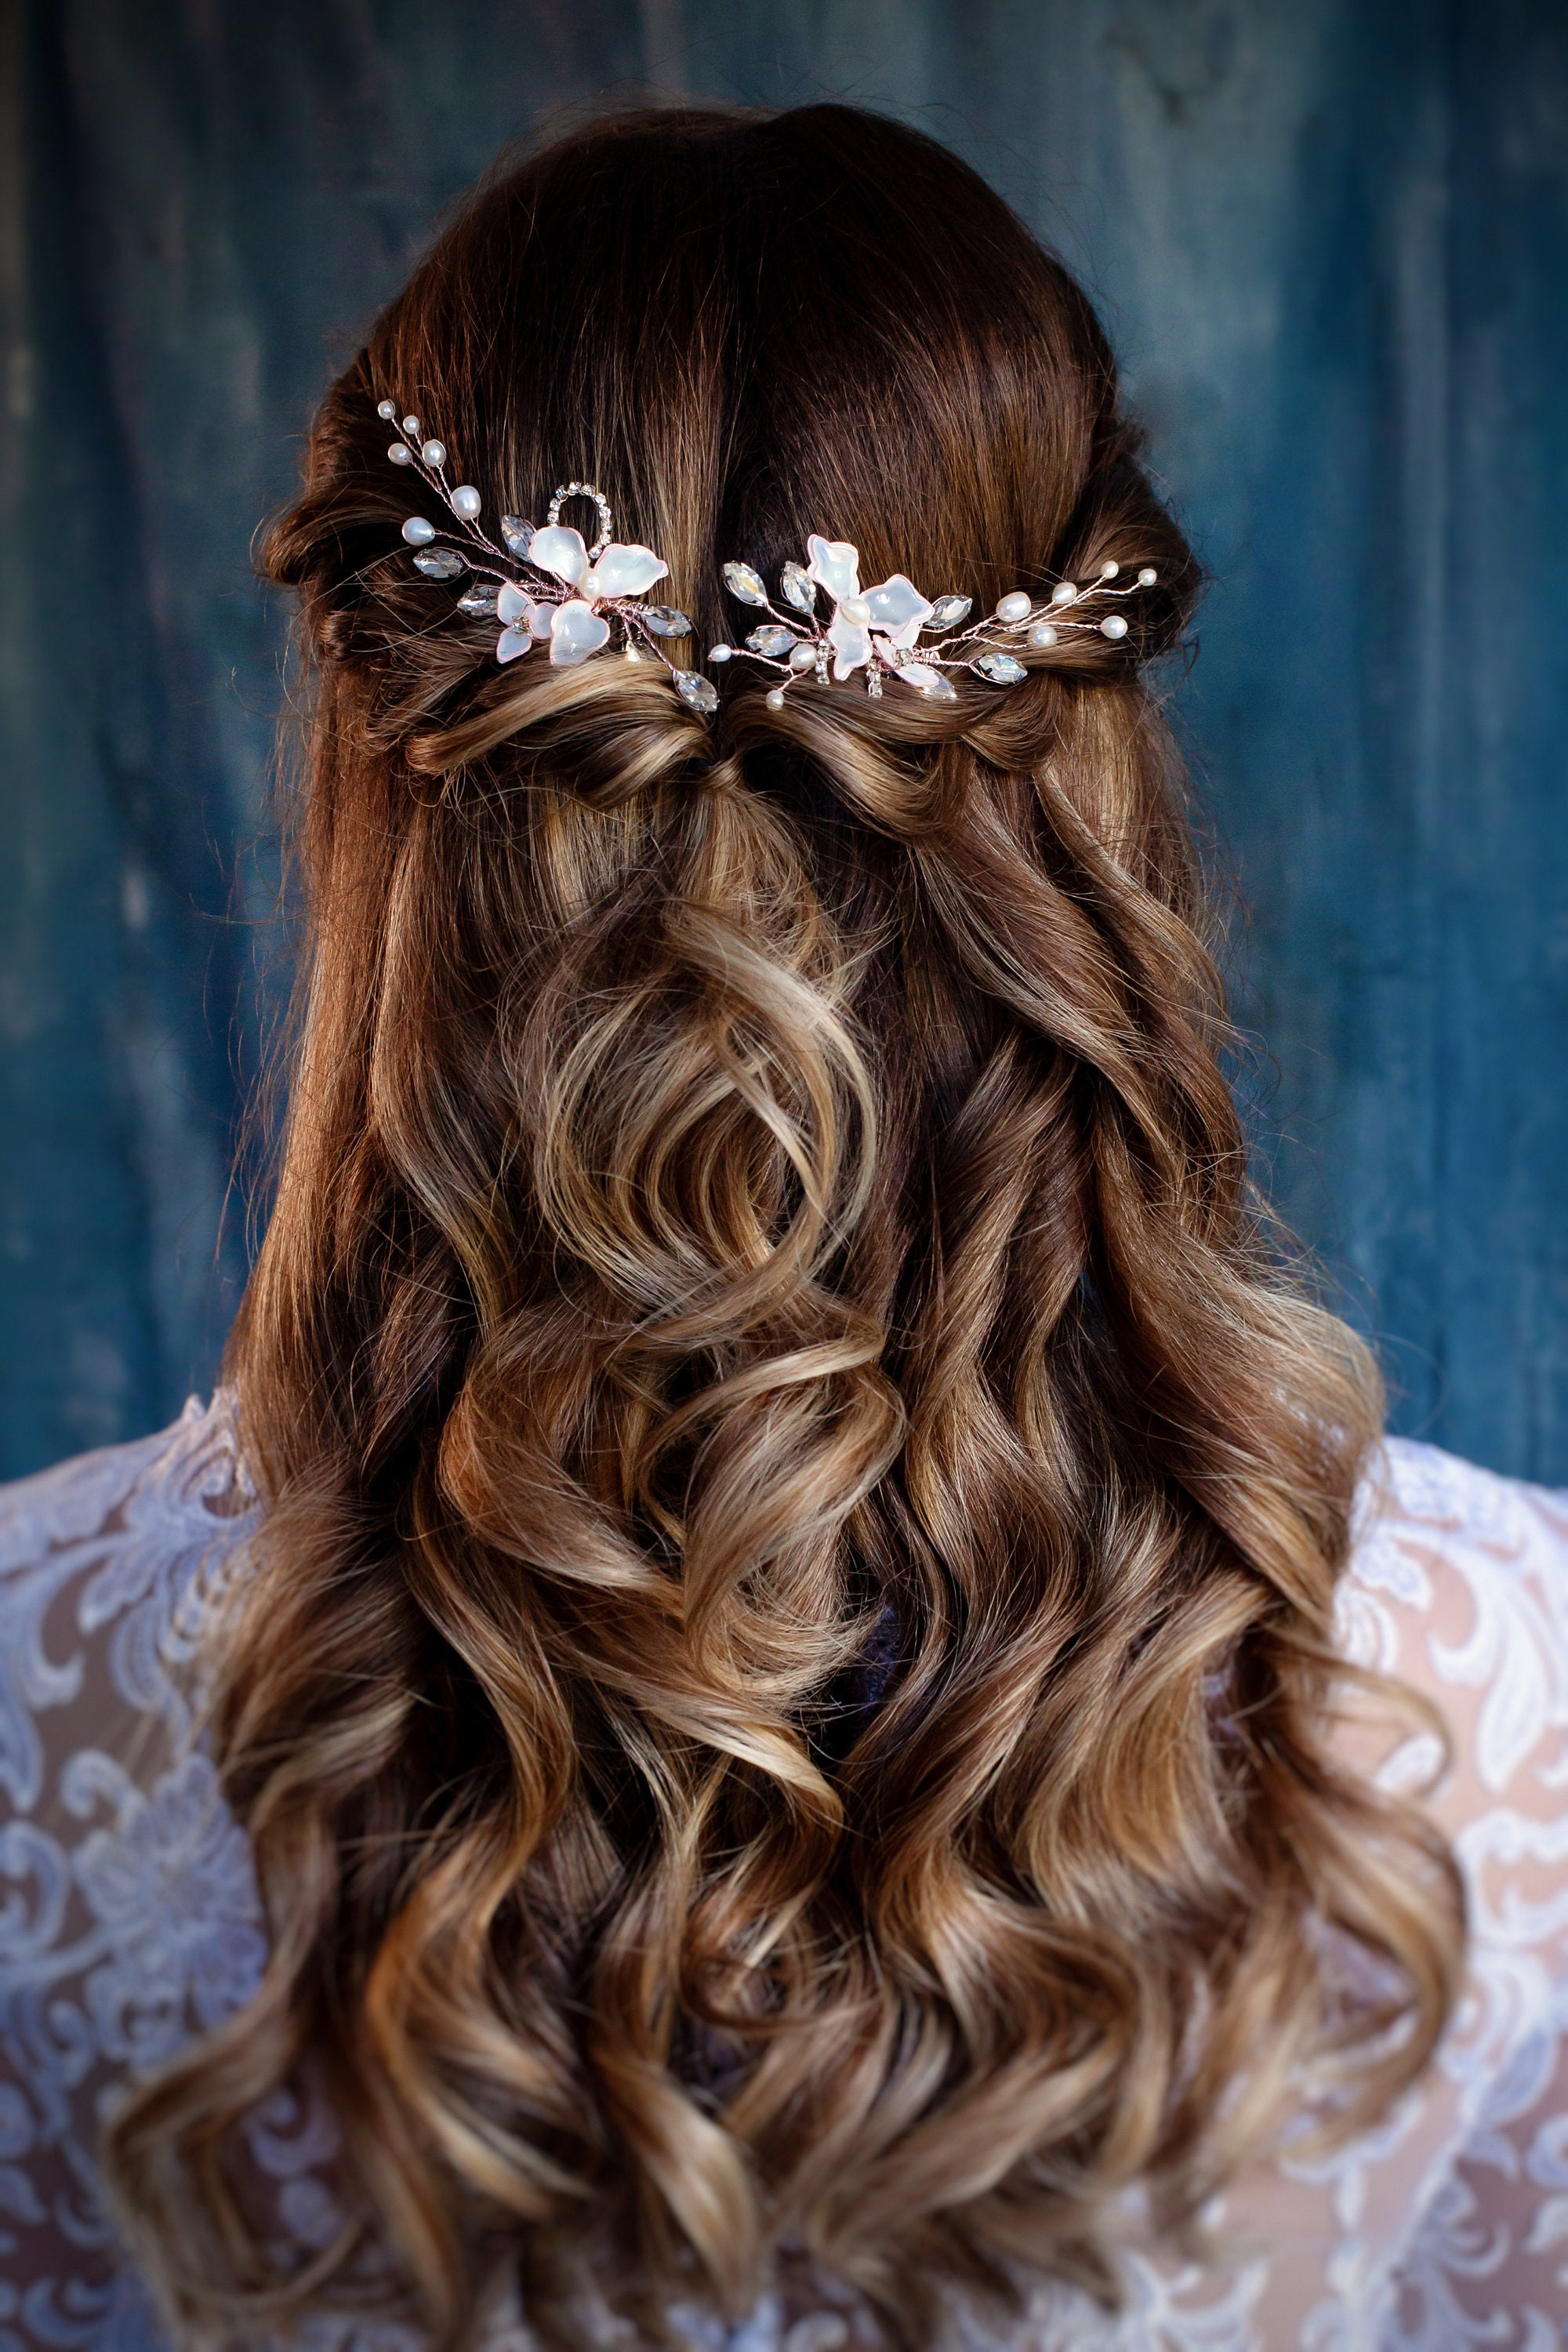 Shop — Toronto Bridal Jewels - Handmade wedding hair accessories and ...